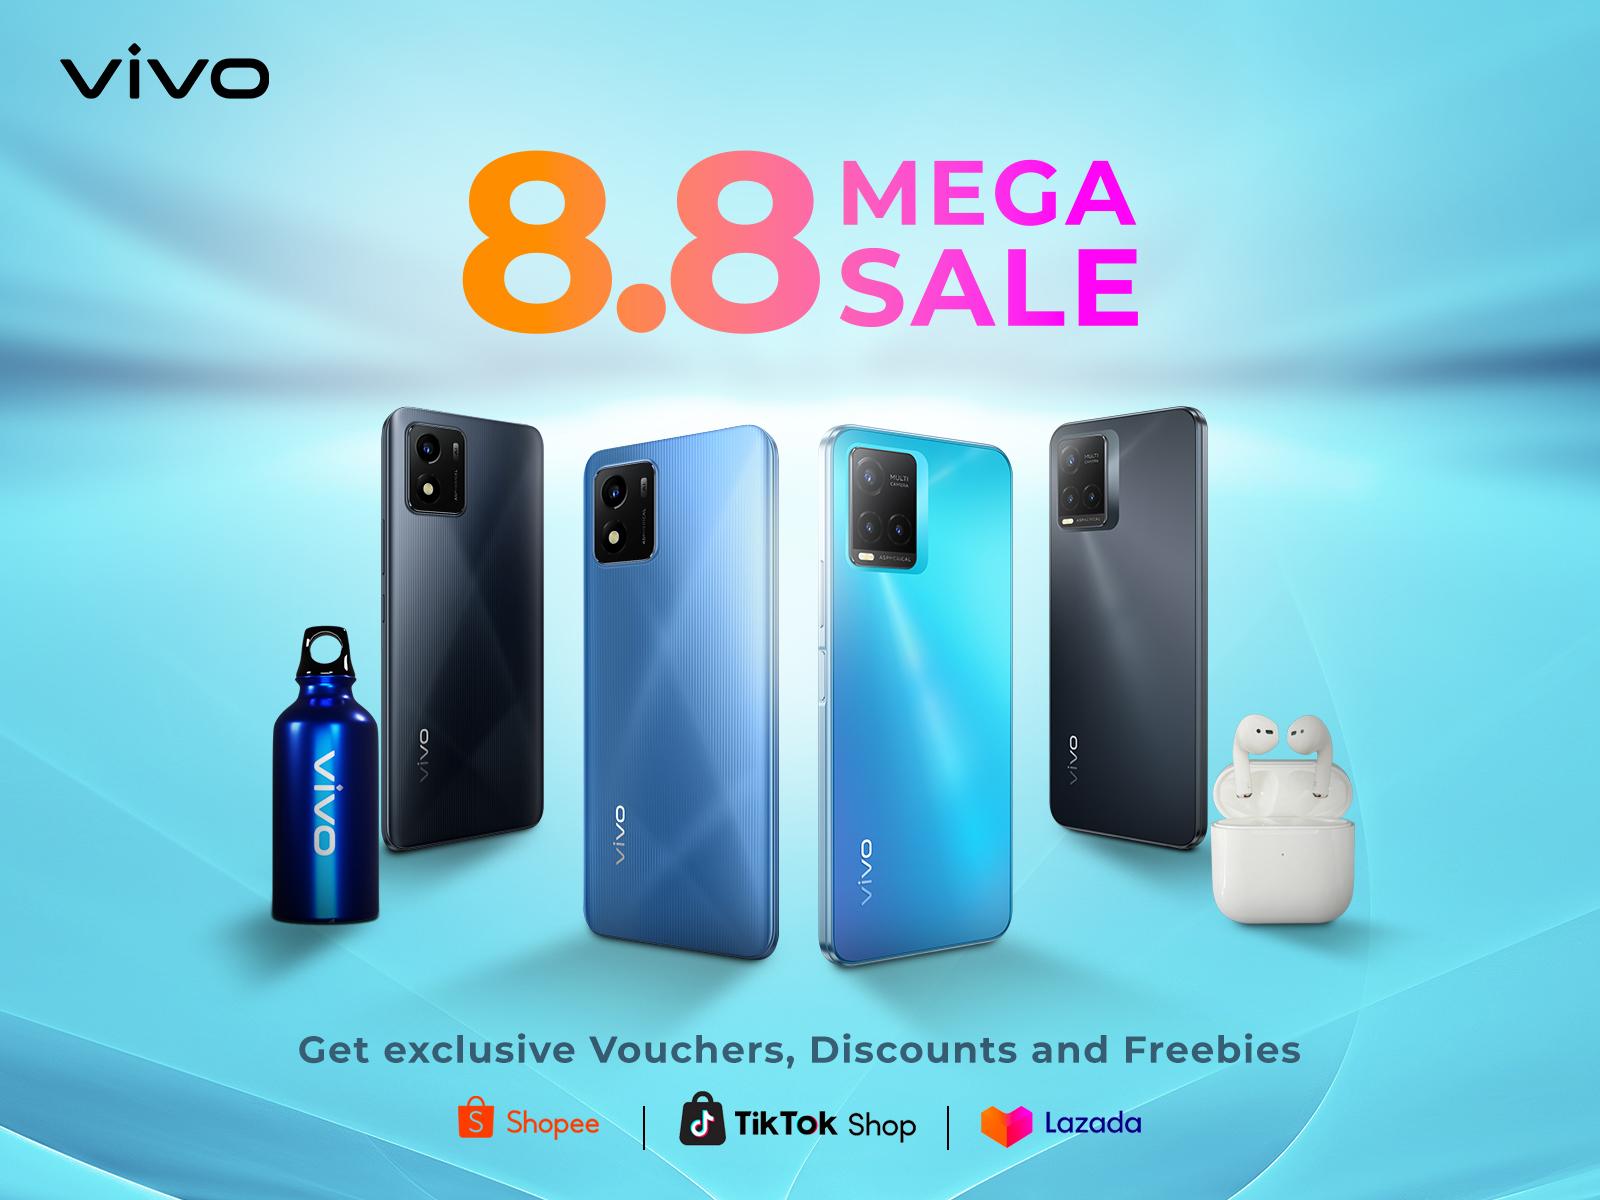 vivo Announces 8.8 Mega Sale in Shopee, Lazada and TikTok Shop